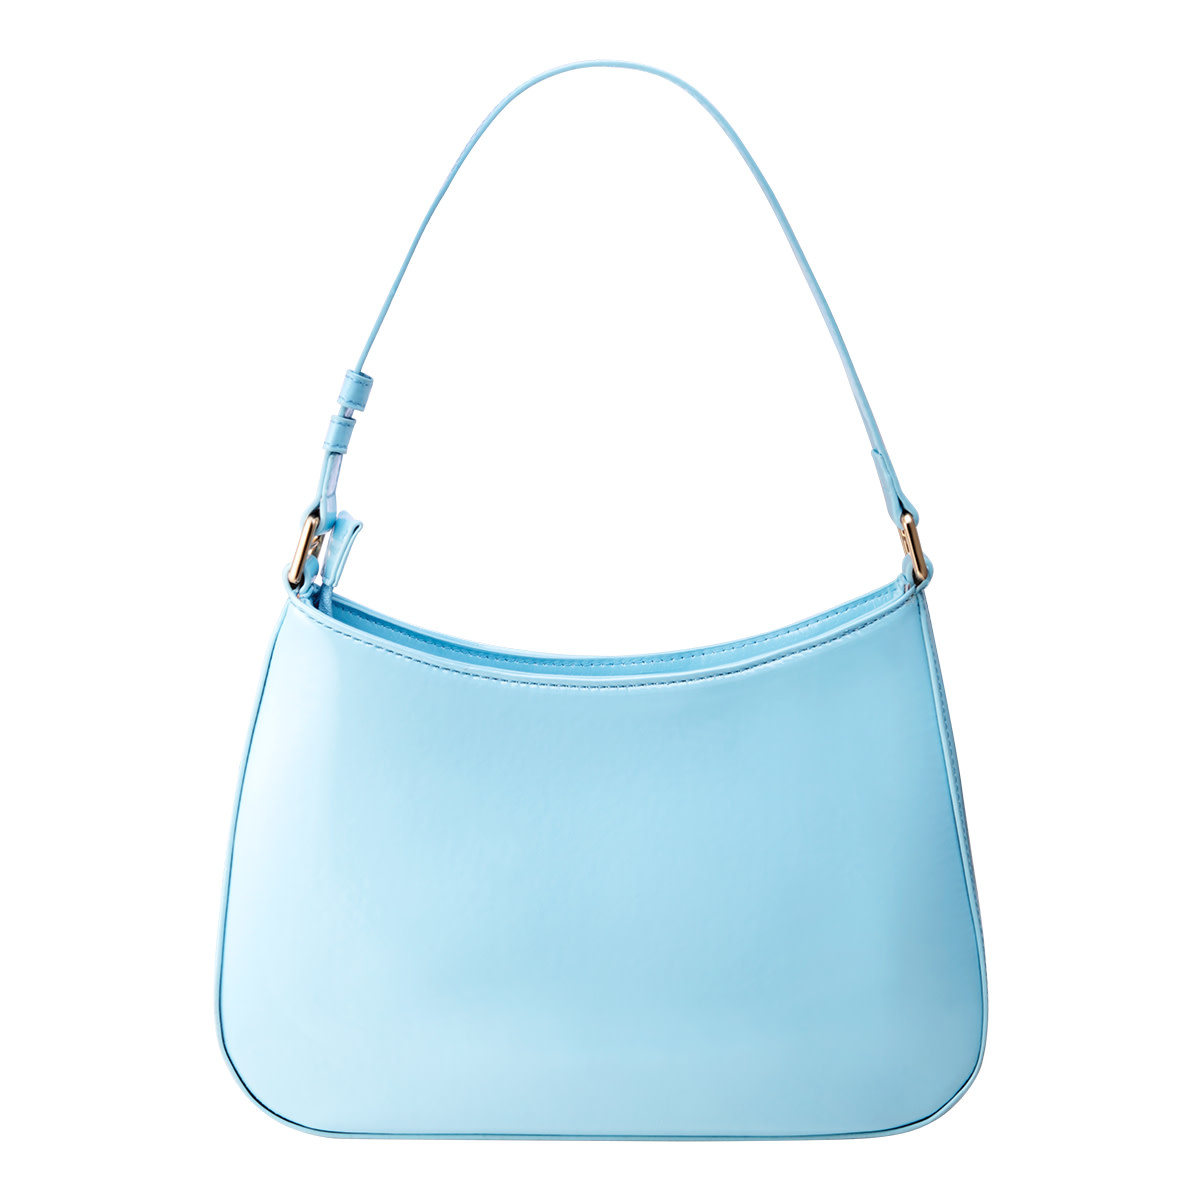 With love Bag glossy blue 28cm x 17cm x 6cm